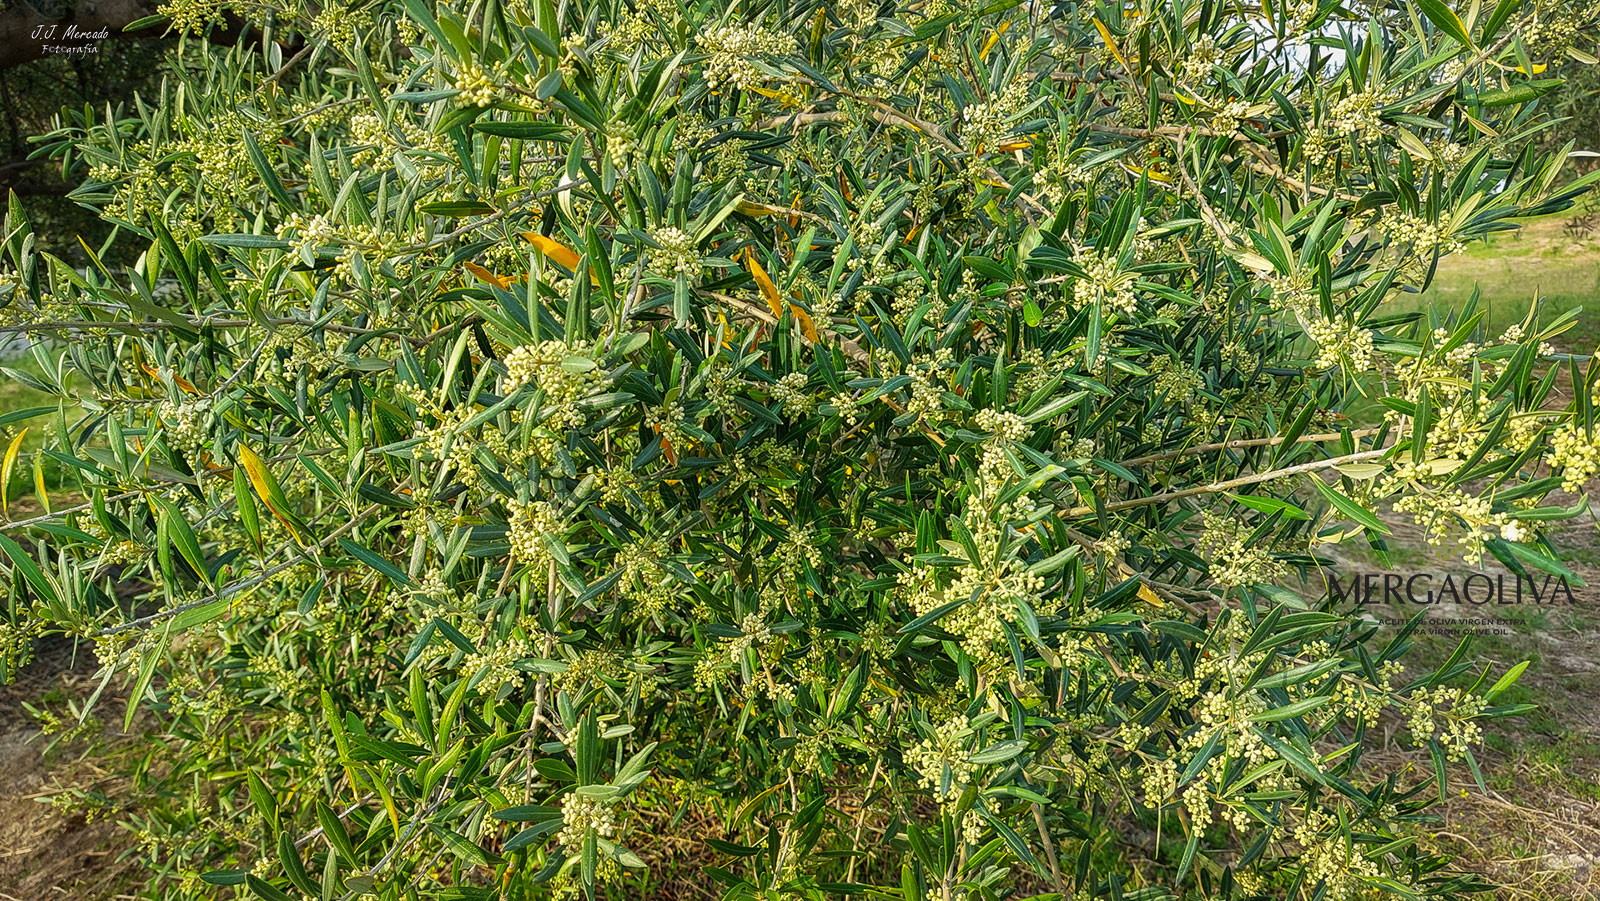 Olivo floracion mergaoliva